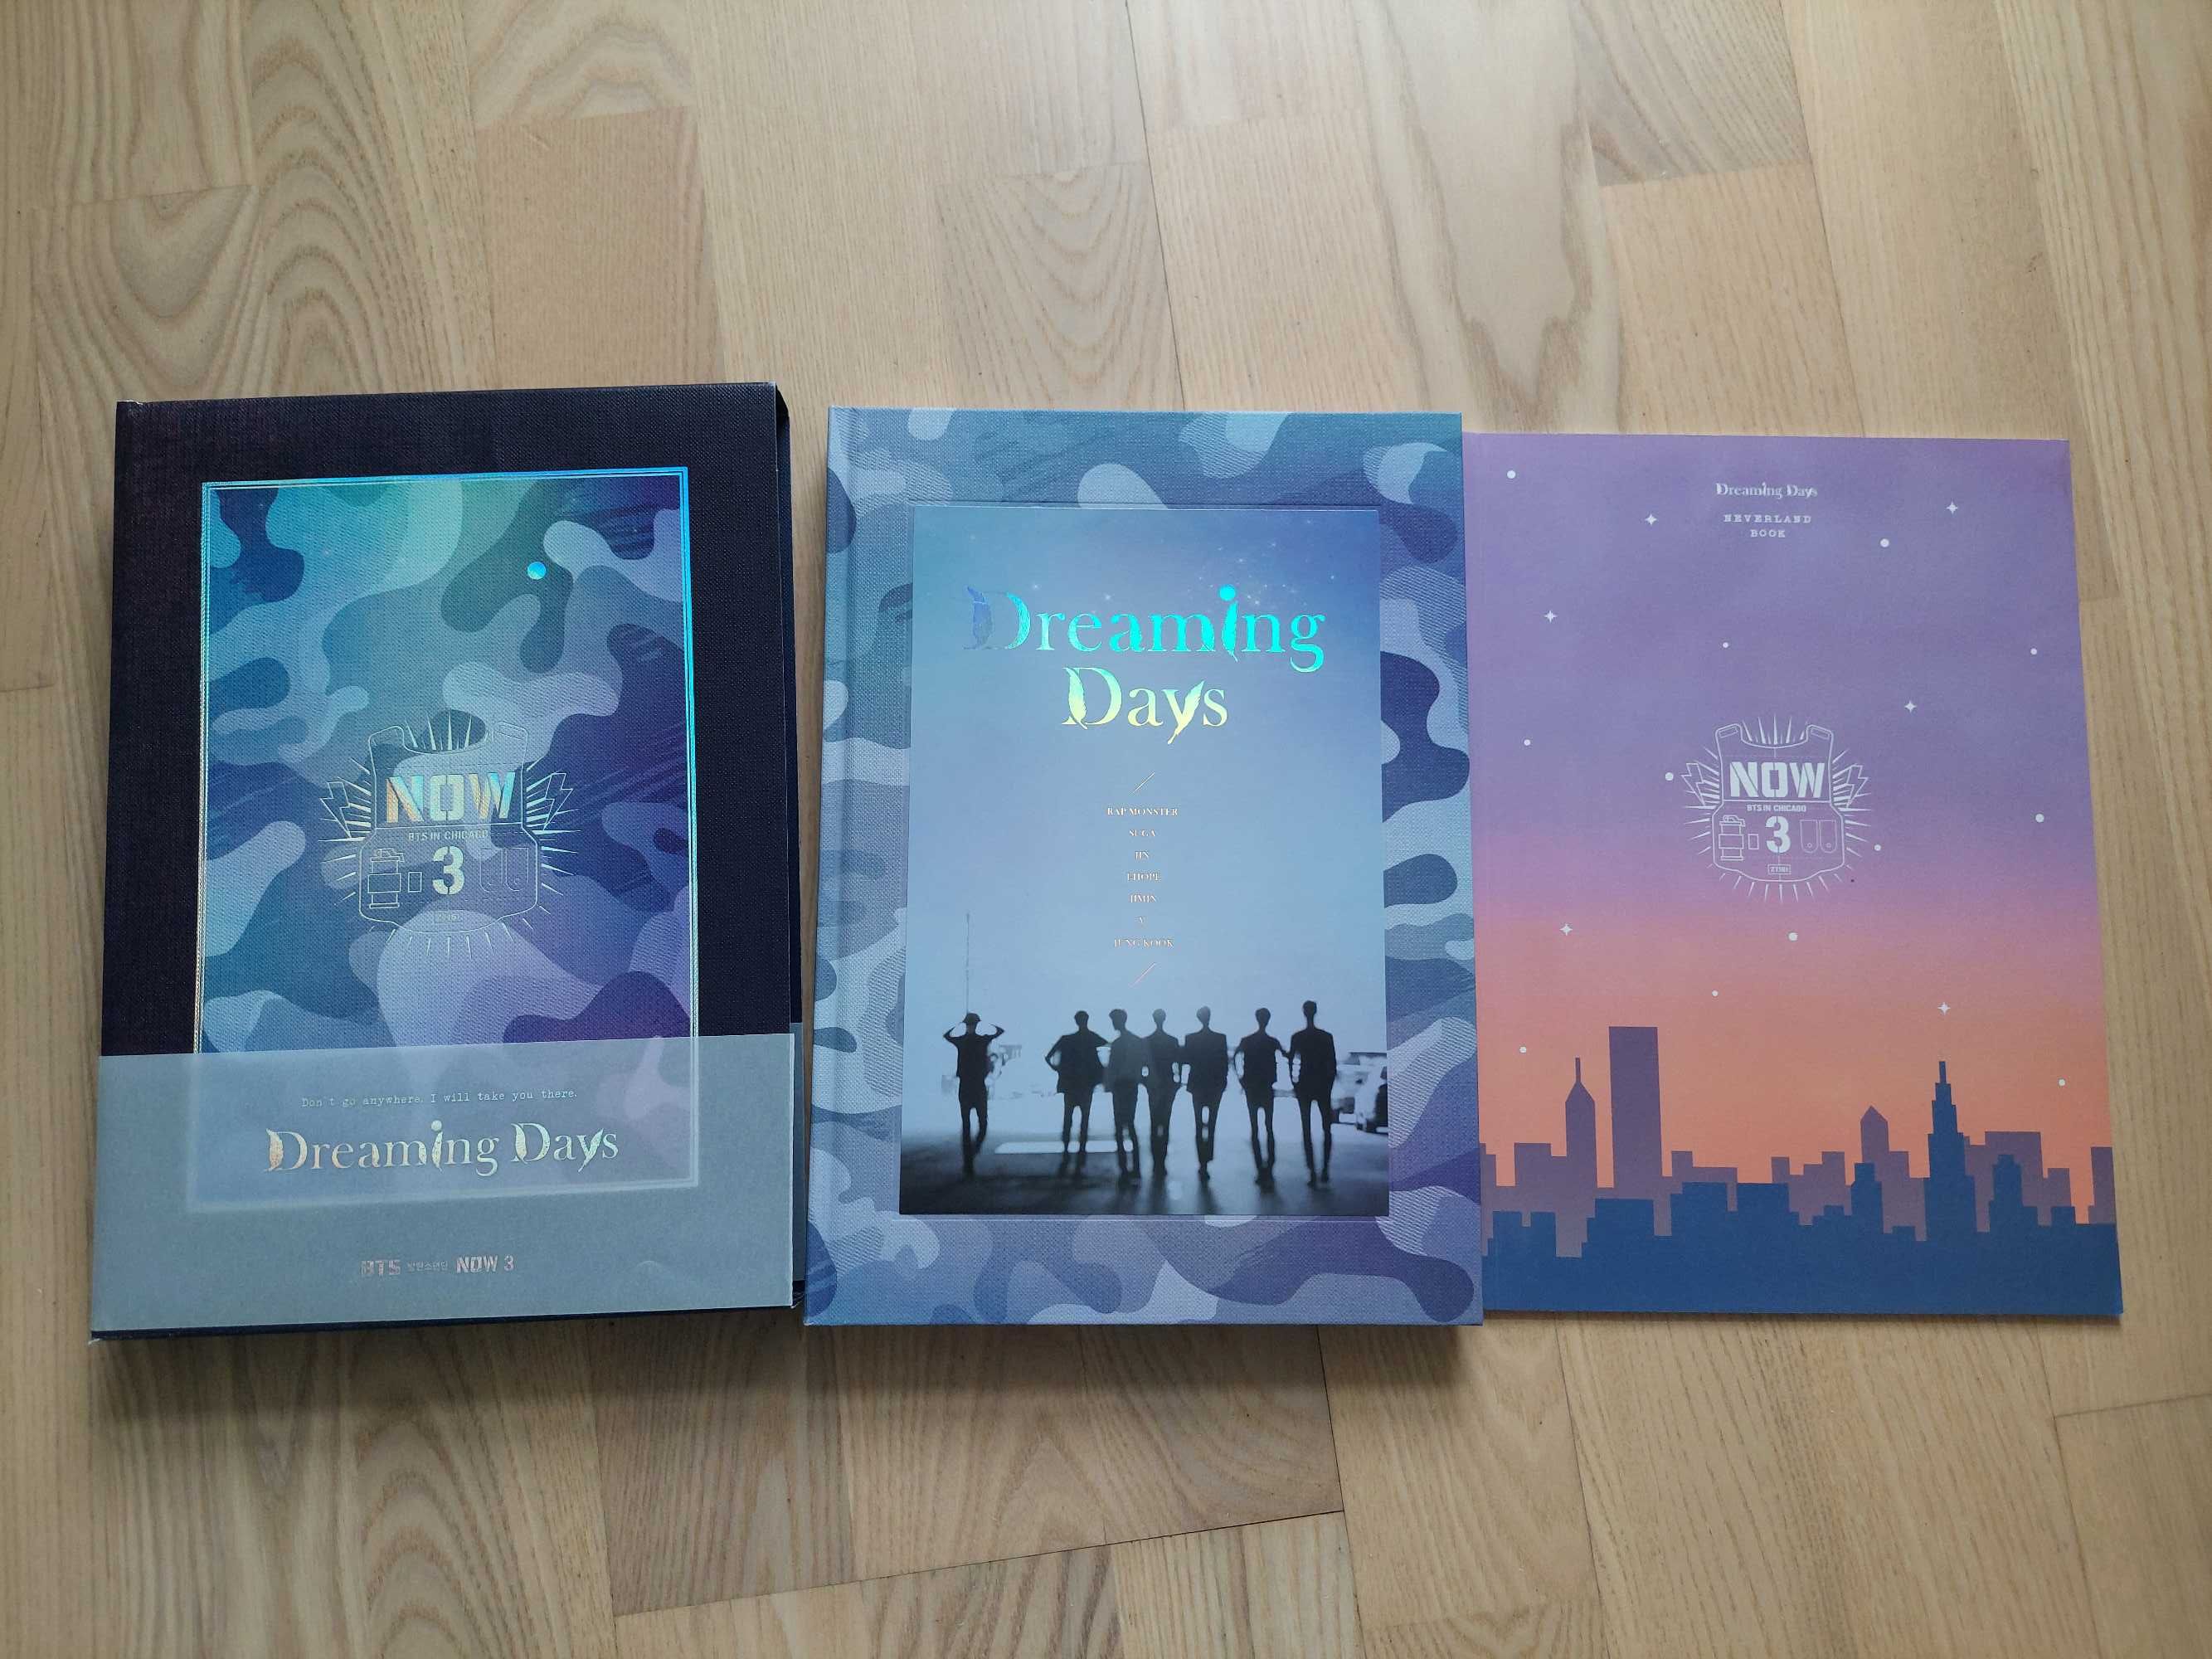 BTS - Now3 Dreaming Days In Chicago [2016] Photobook + DVD kpop 방탄소년단